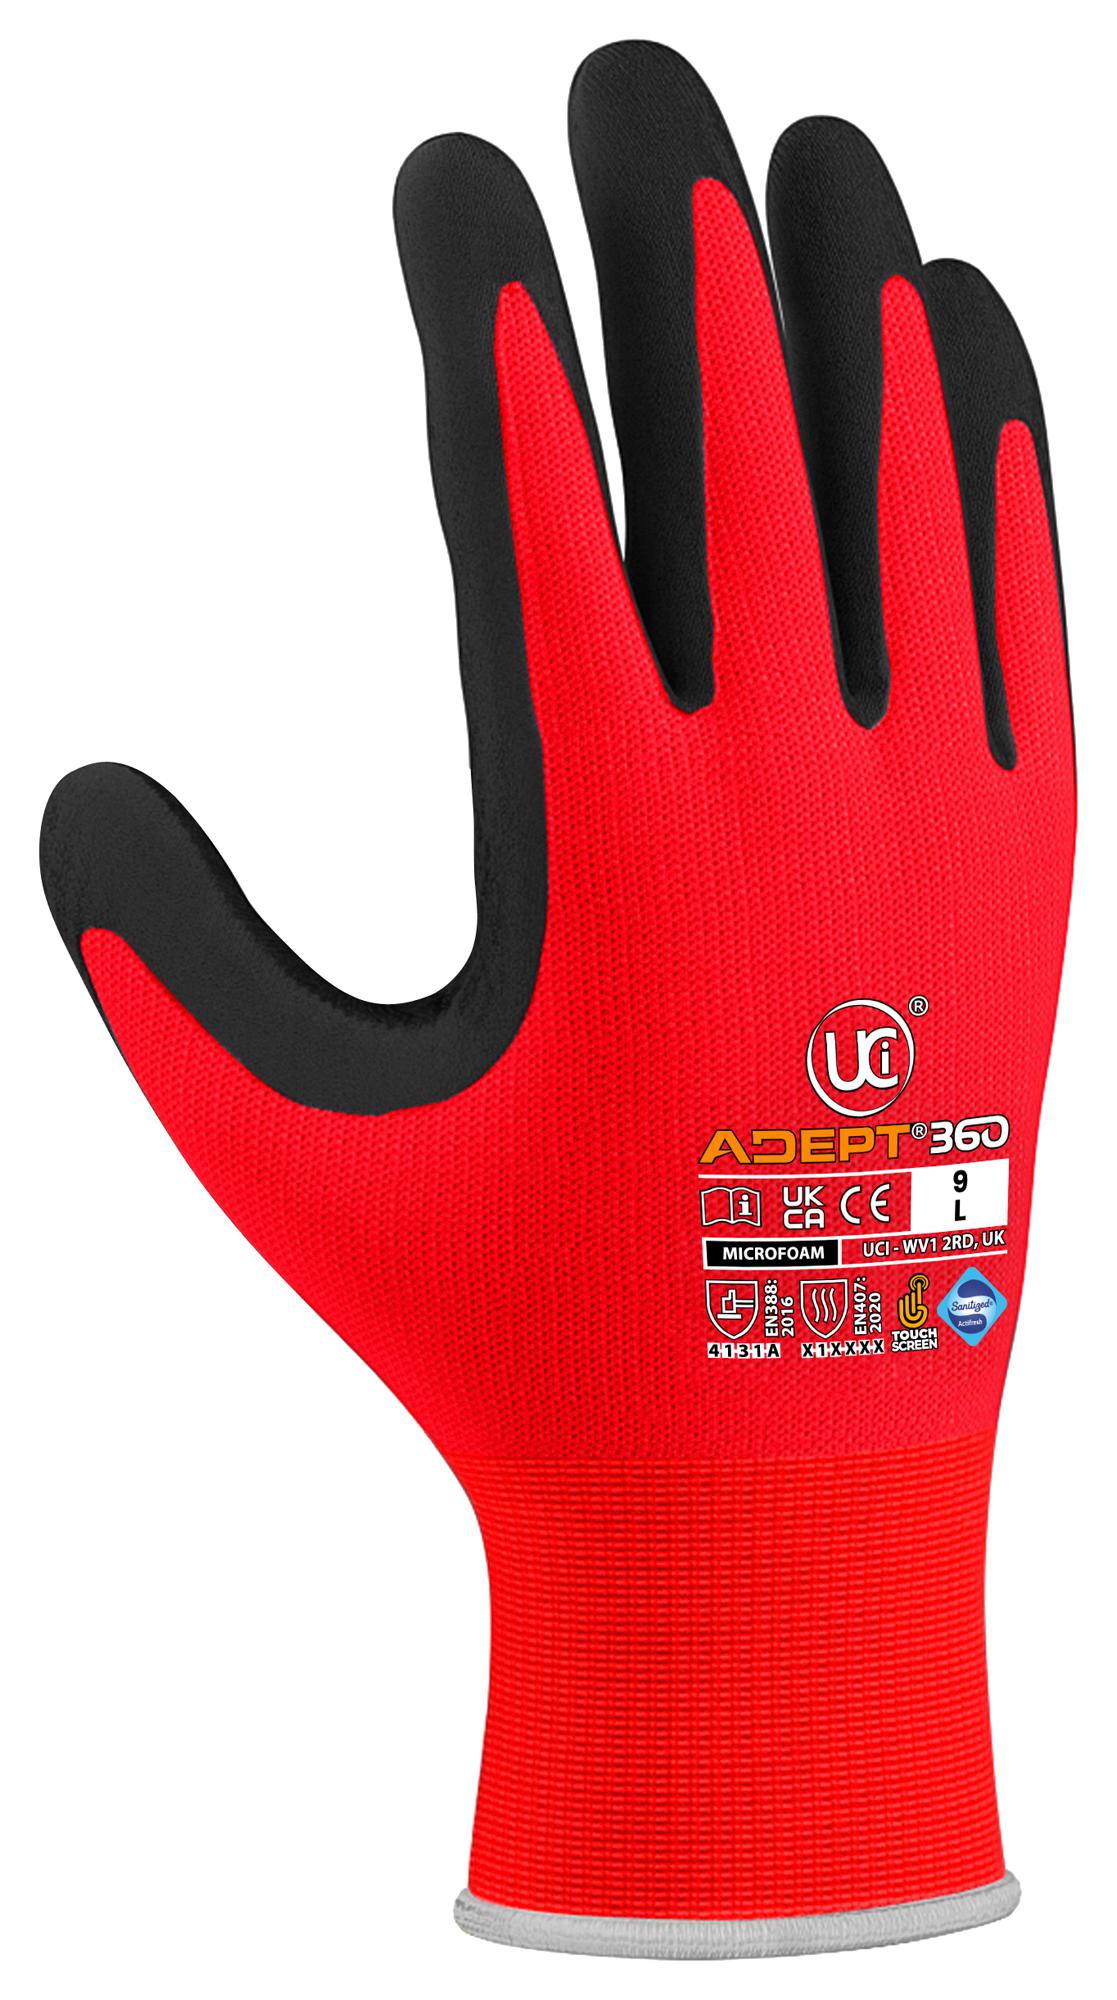 Uci G/adept360-Red/10 Gloves, Nylon/spandex, Red, Xl